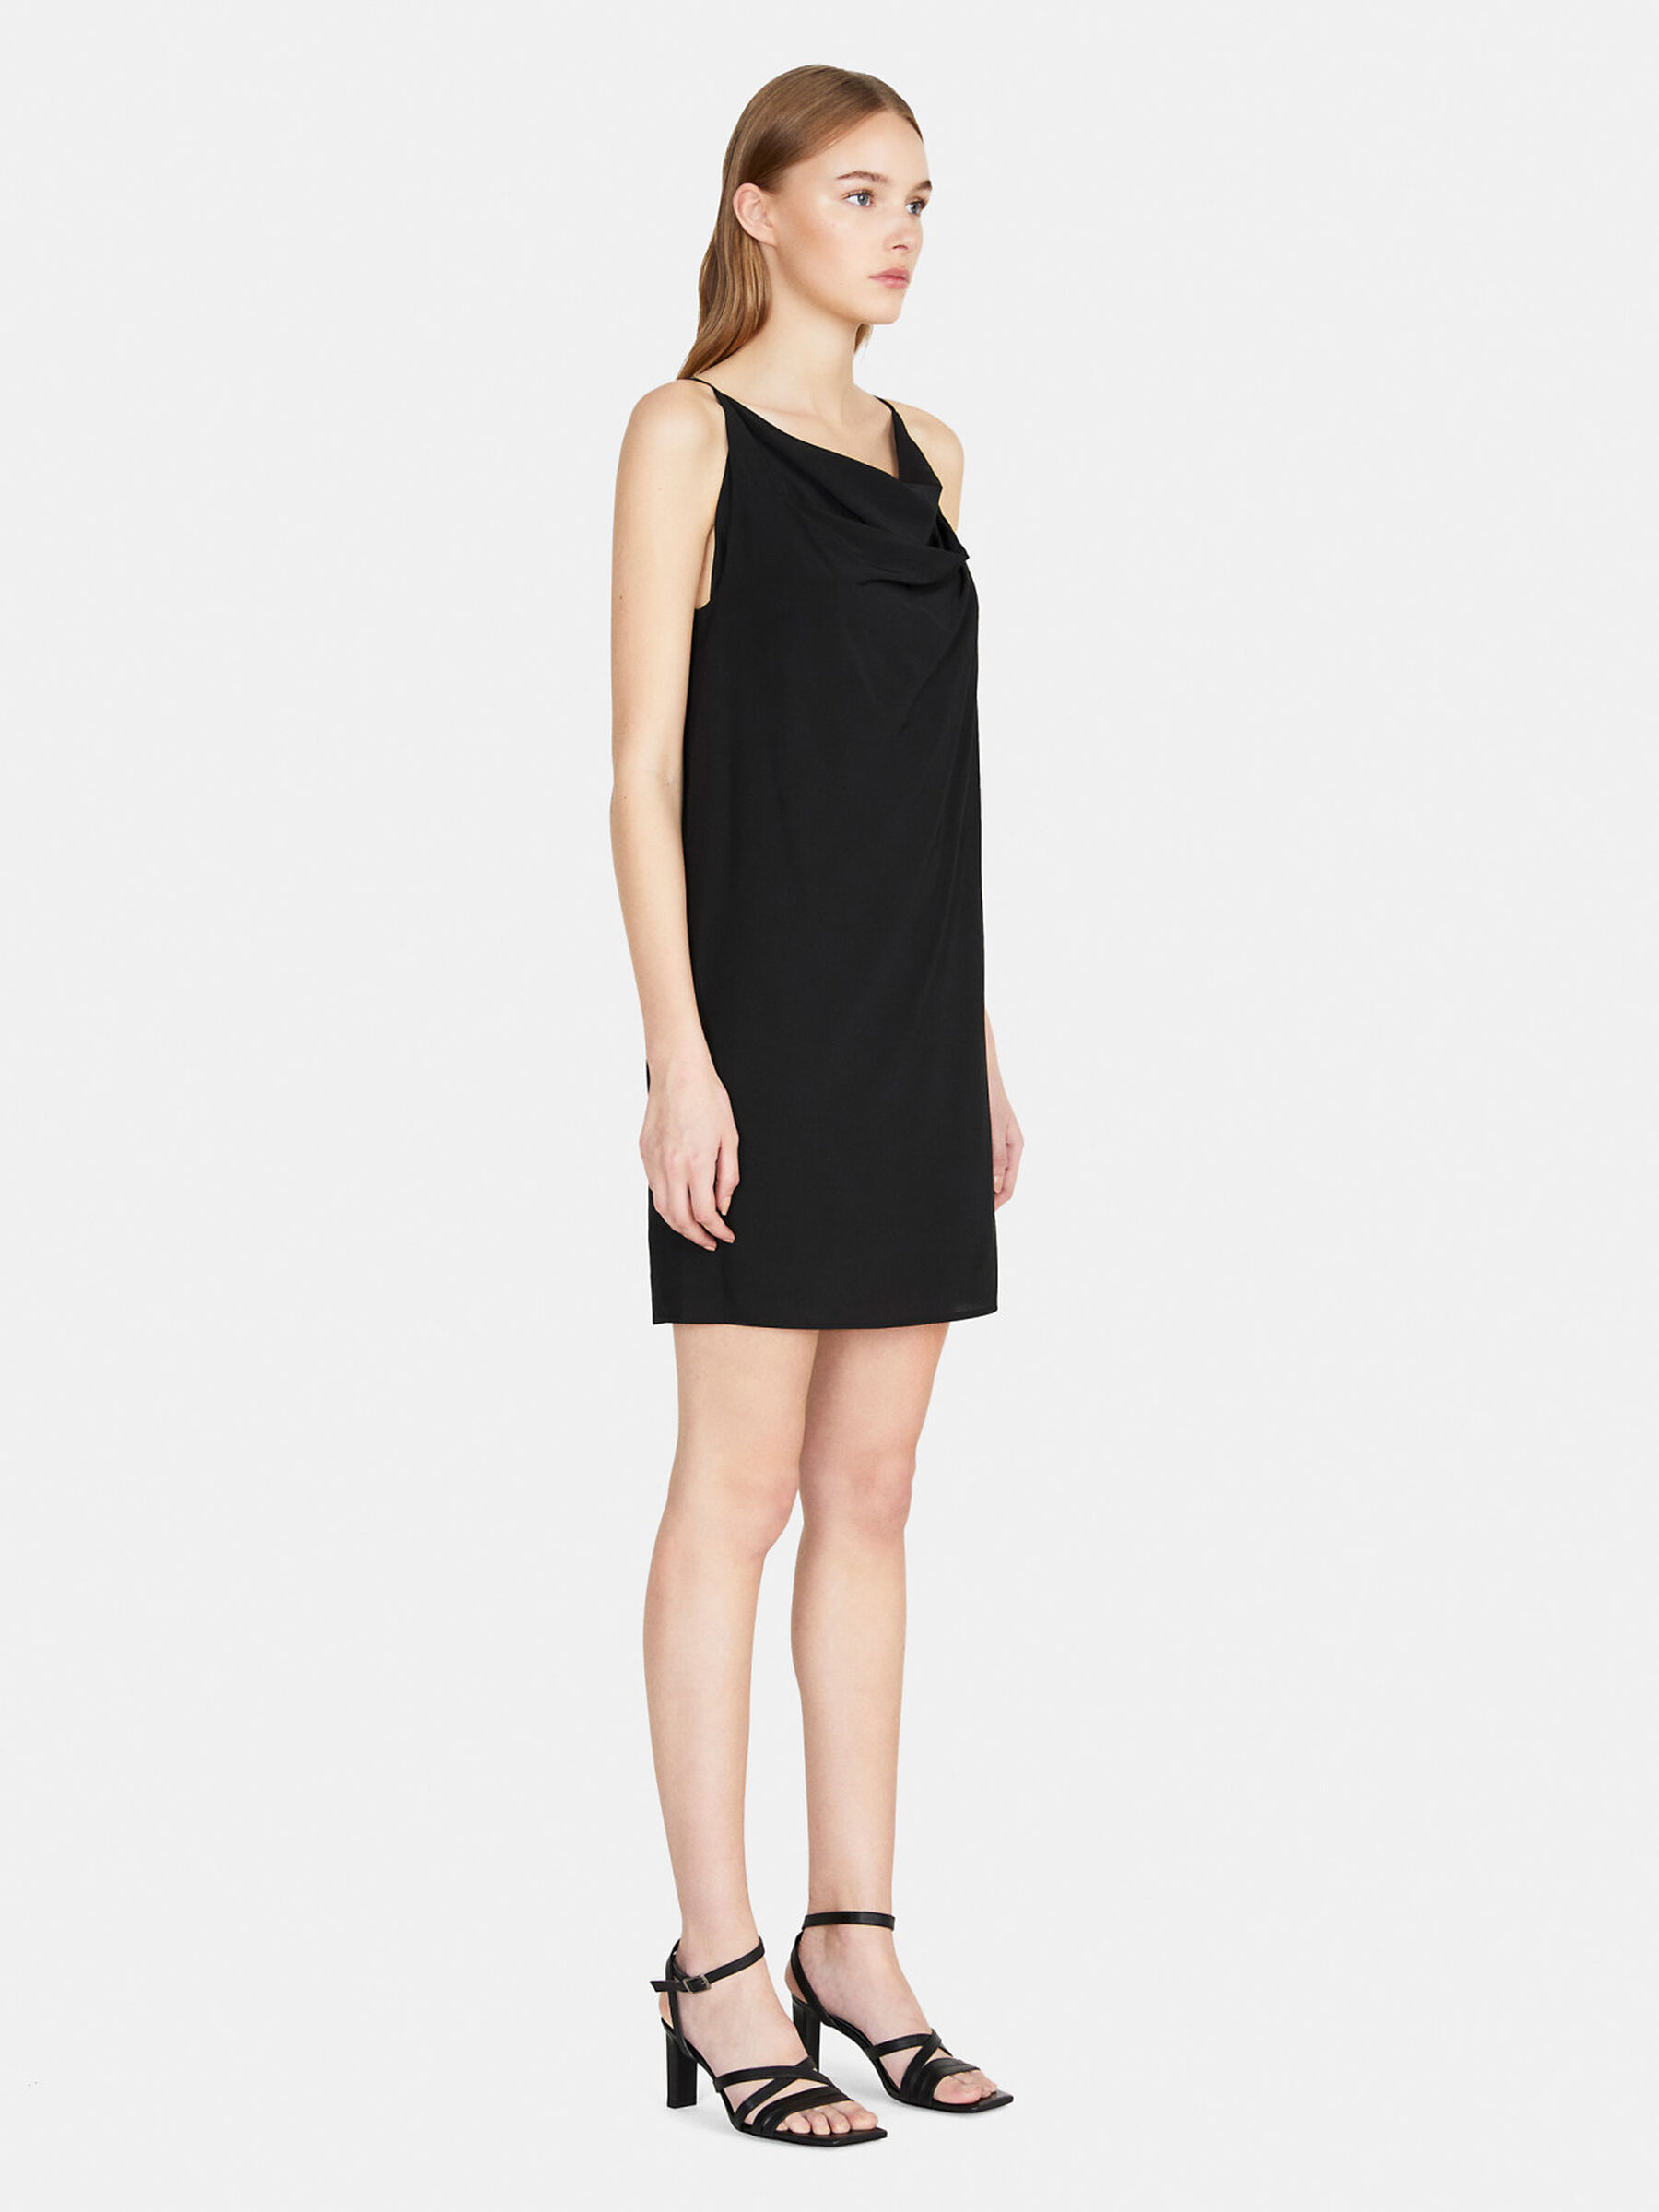 Flowy short - Black dress, Sisley